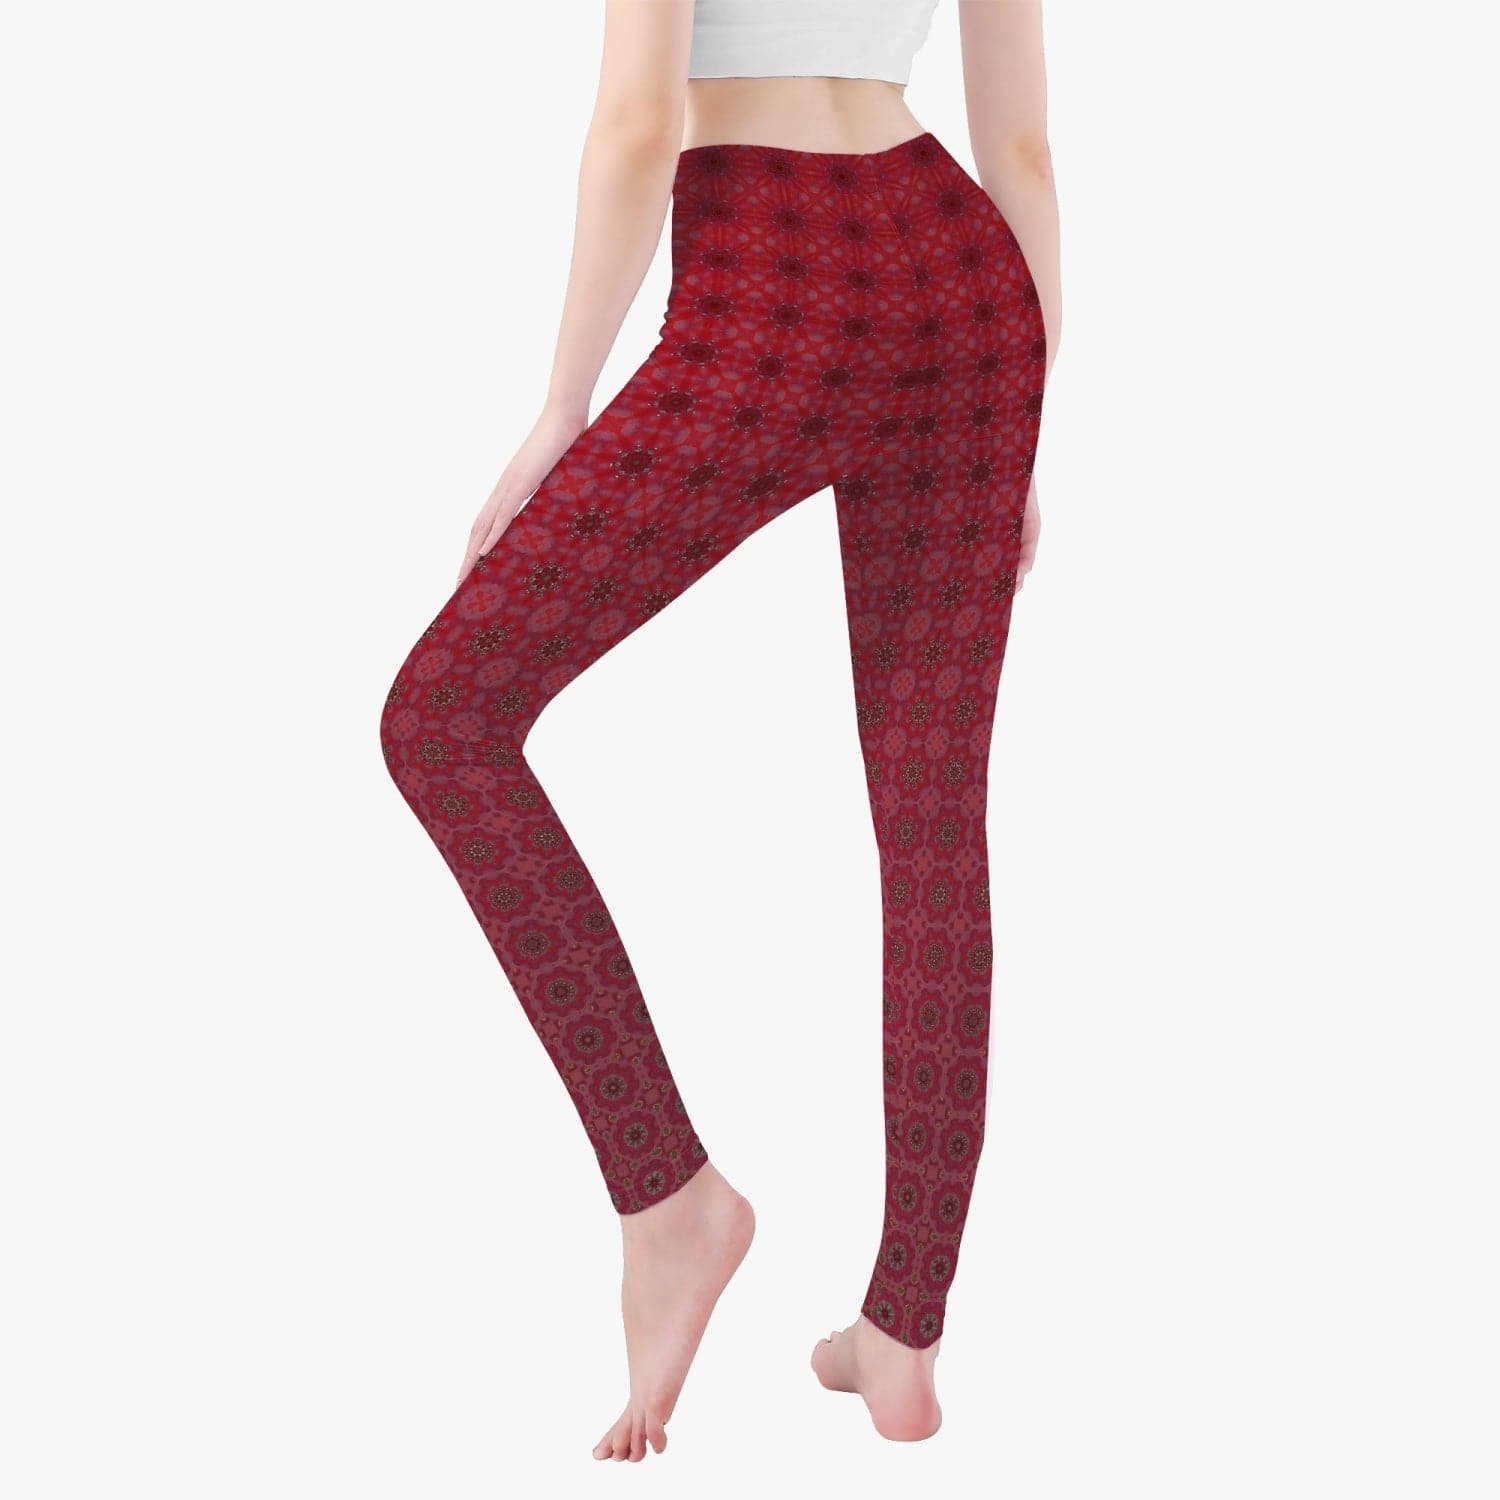 Red Wine fine rosy pattern StylishYoga Pants/Leggings for women, by Sensus Studio Design